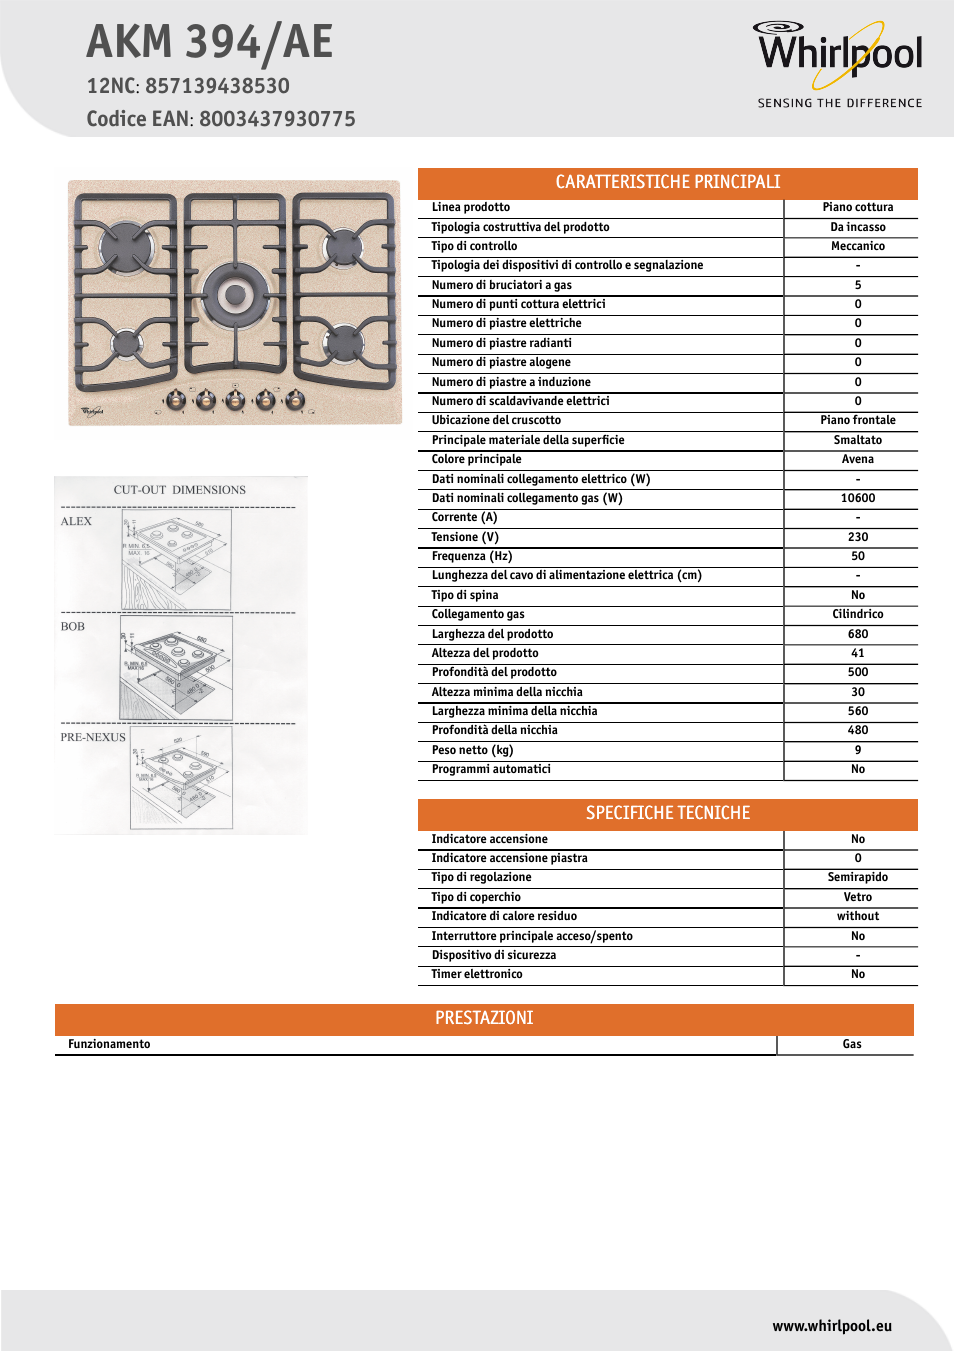 Whirlpool AKM 394-AE Manuale d'uso | Pagine: 1